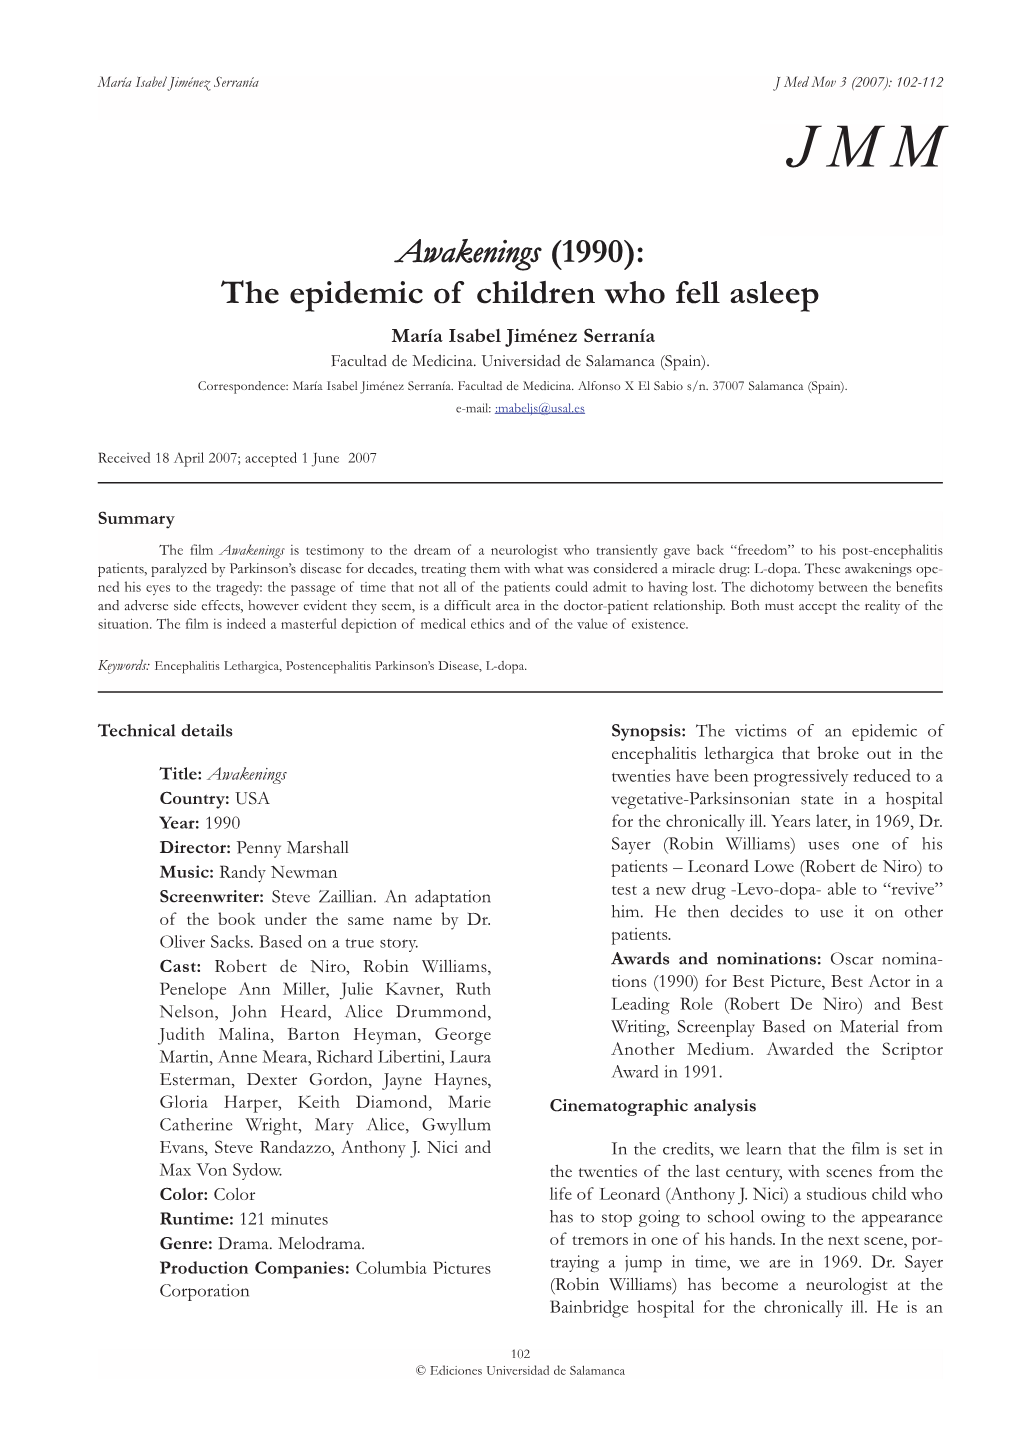 Awakenings (1990): the Epidemic of Children Who Fell Asleep María Isabel Jiménez Serranía Facultad De Medicina